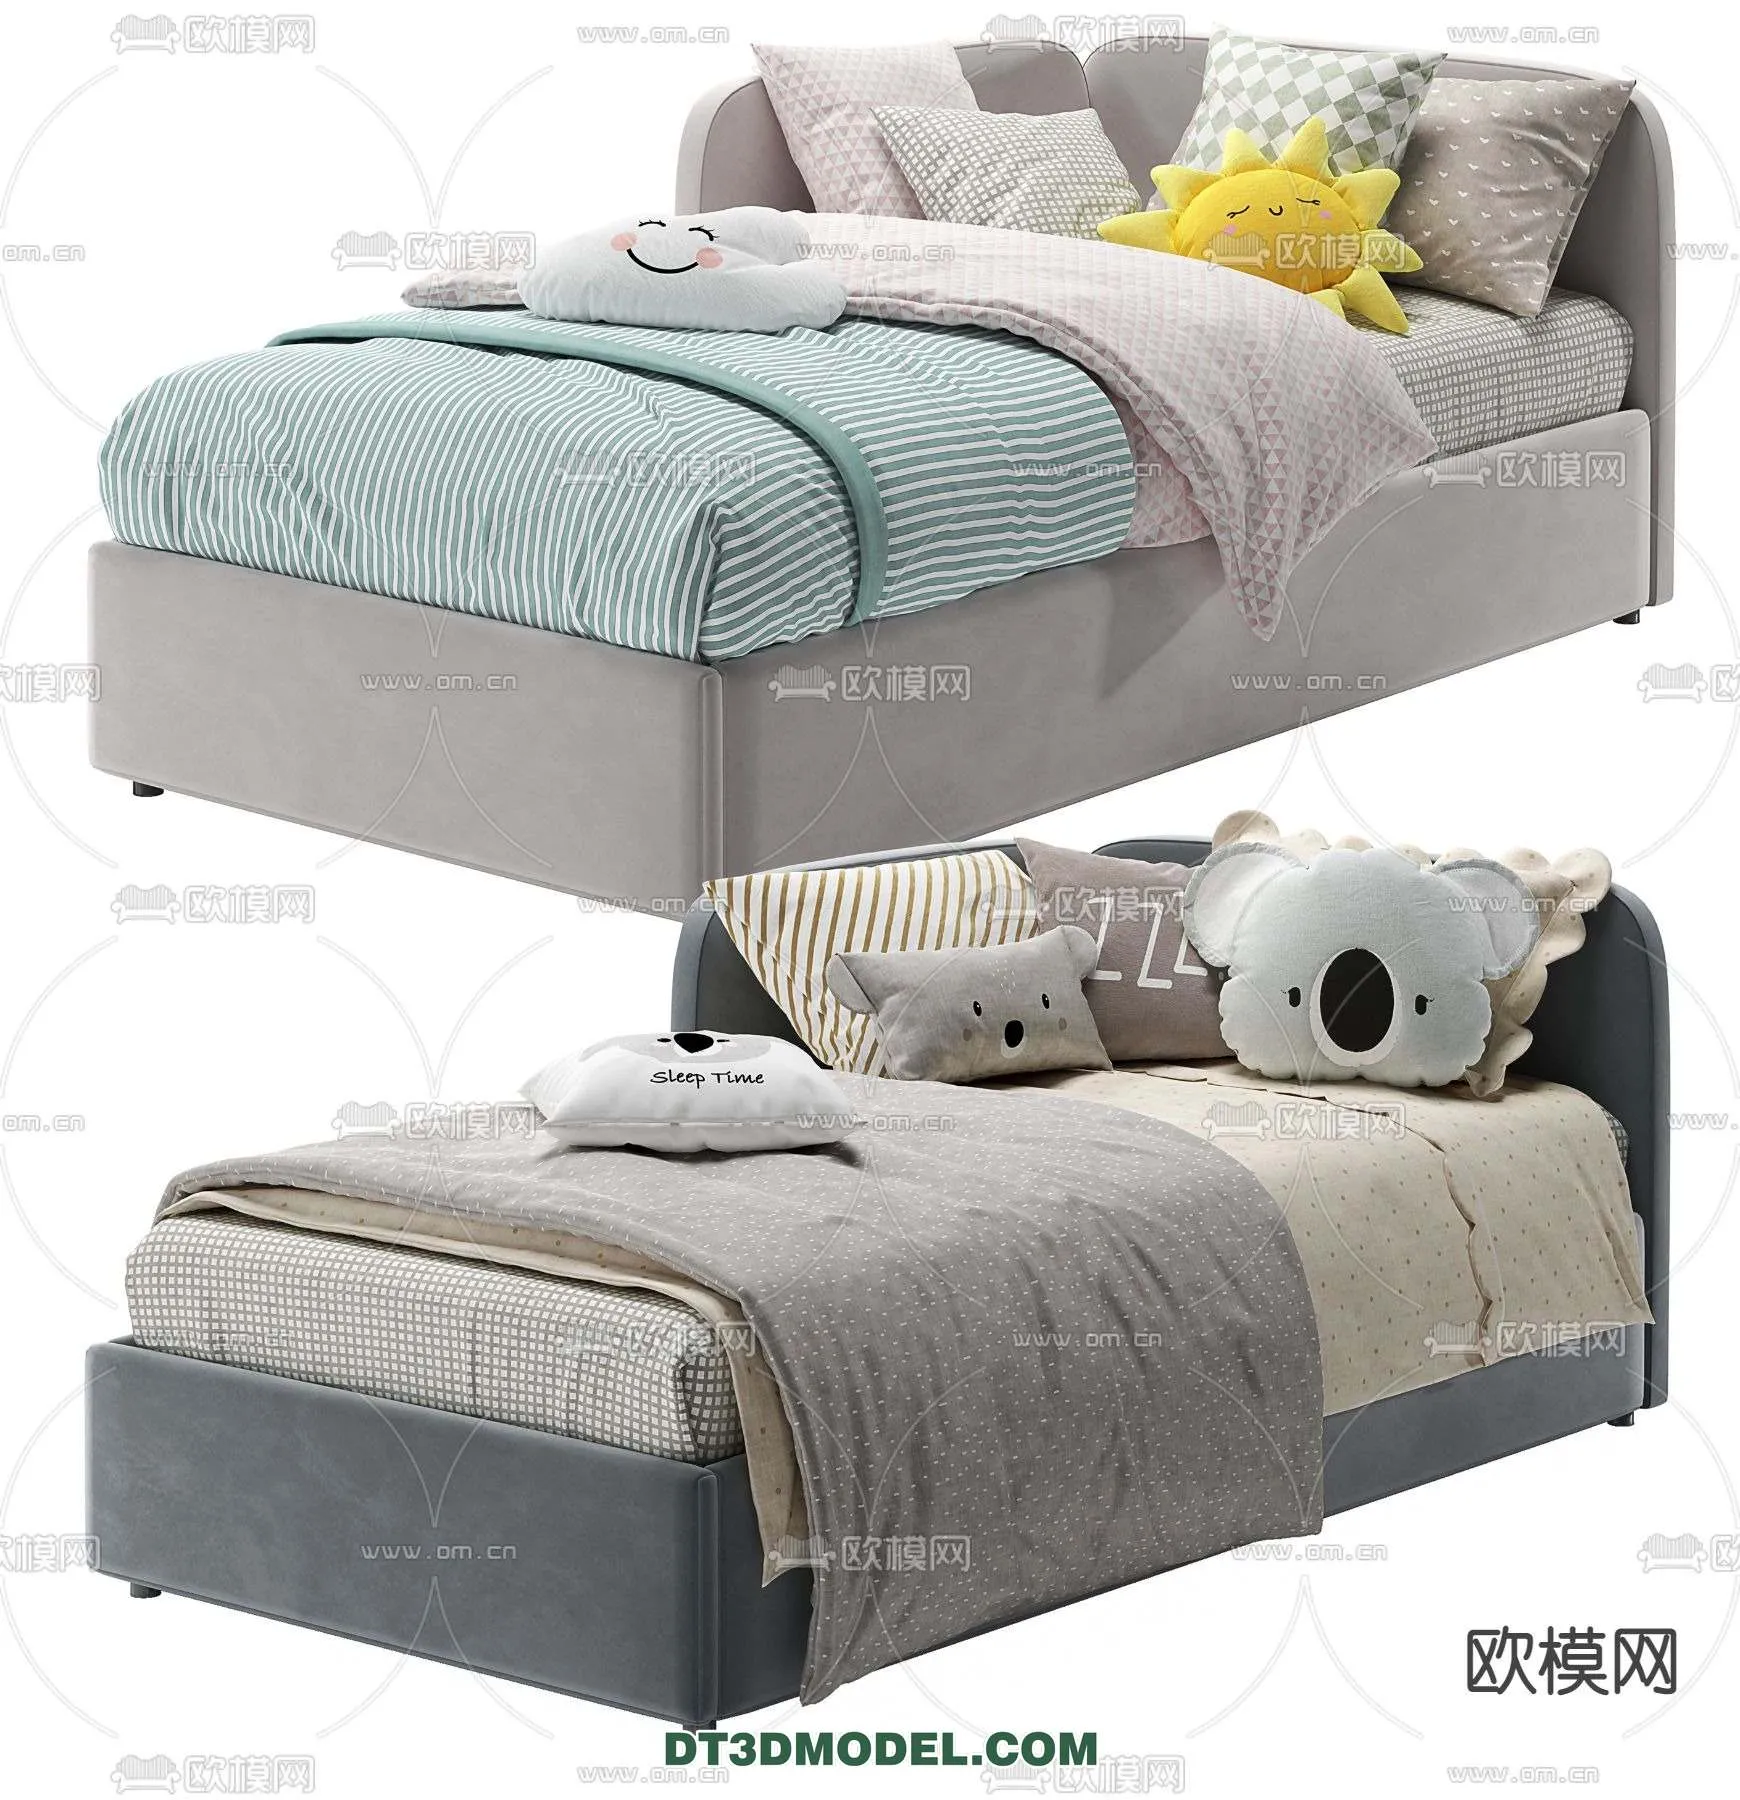 Double Bed 3D Models – 0050